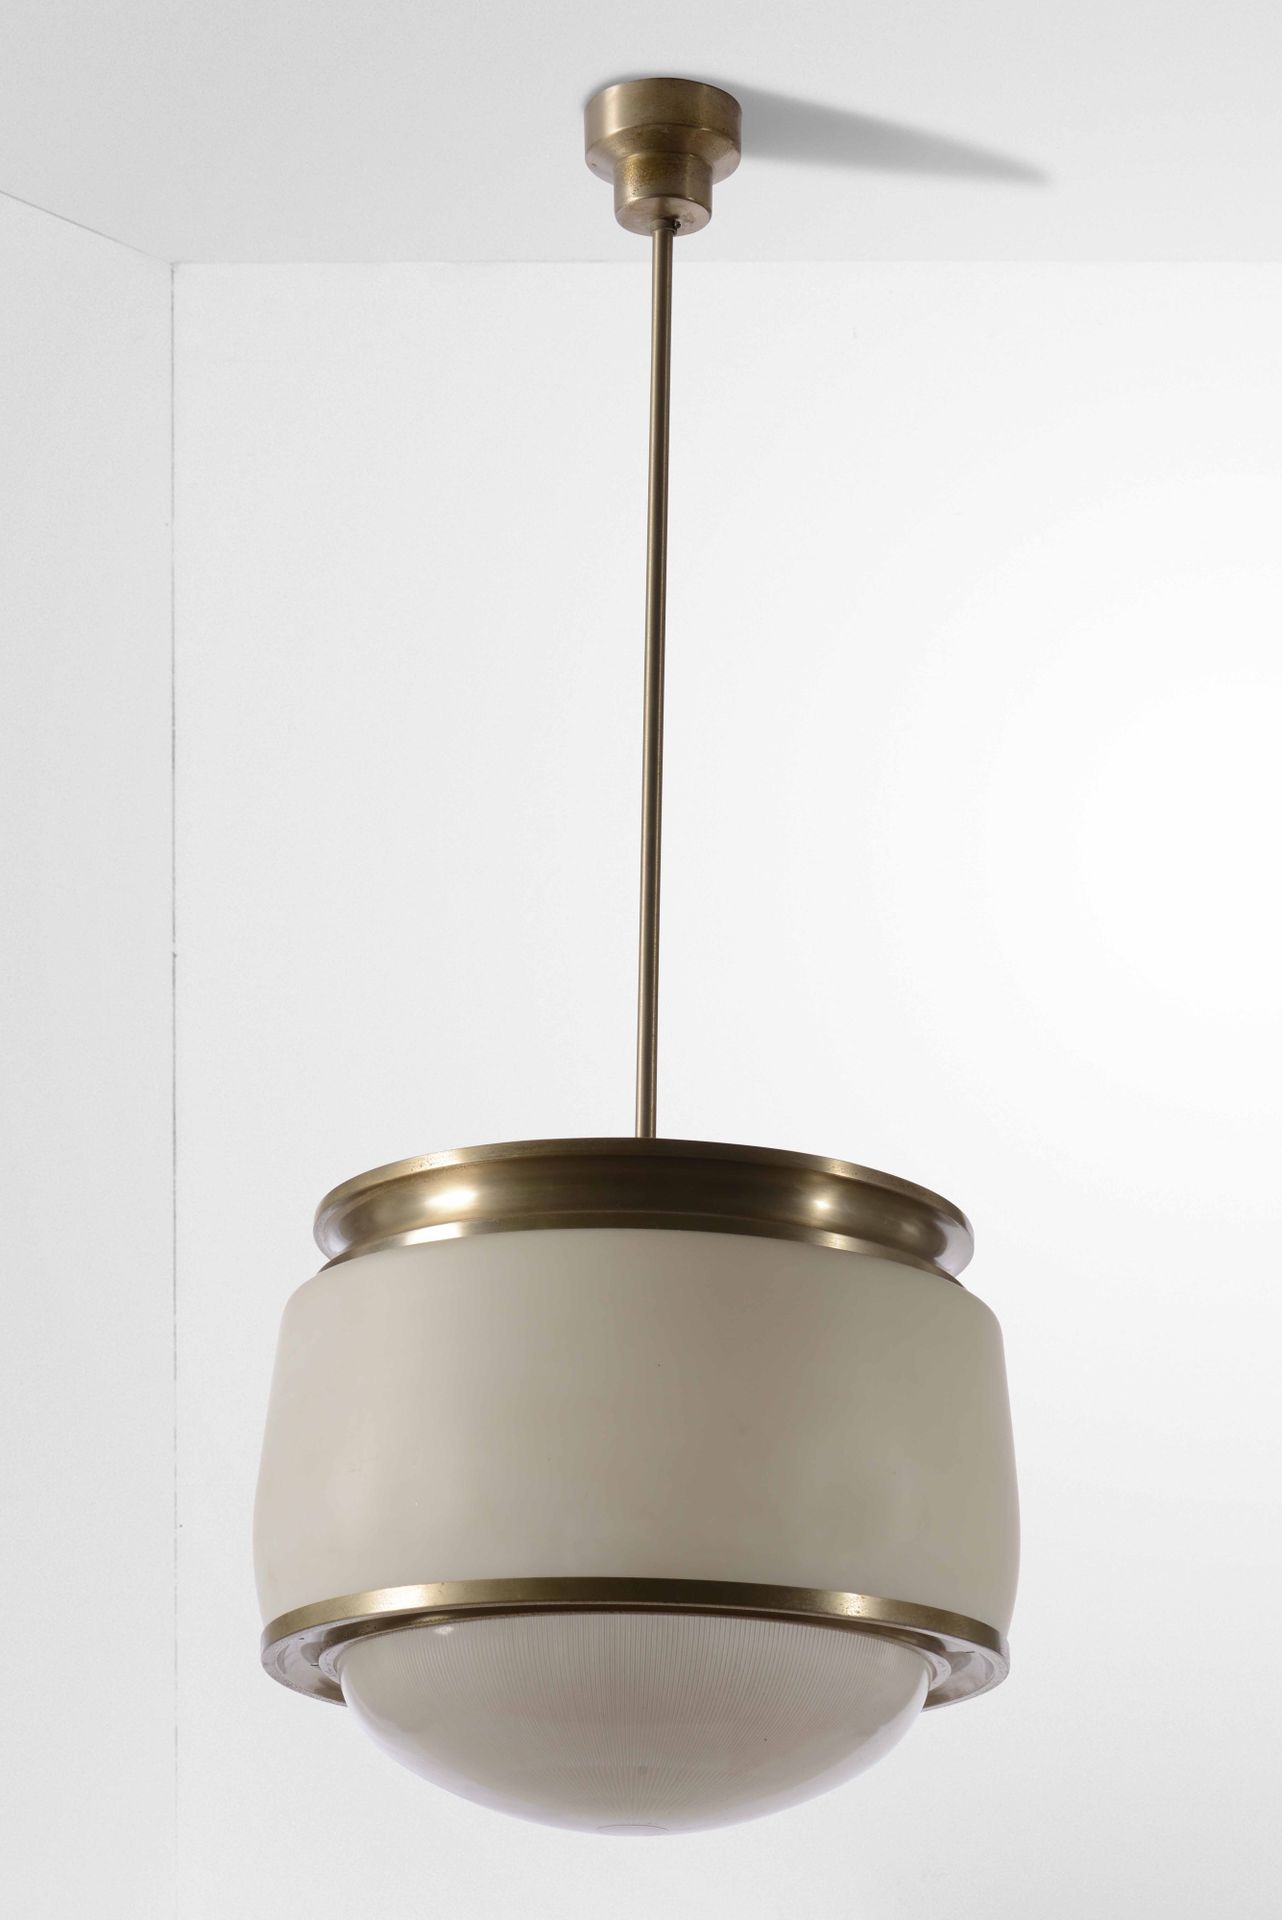 Sergio Mazza, 吊灯，镀镍金属结构，乳白色玻璃扩散器。制造商Artemide，意大利，1970年 约40x100厘米